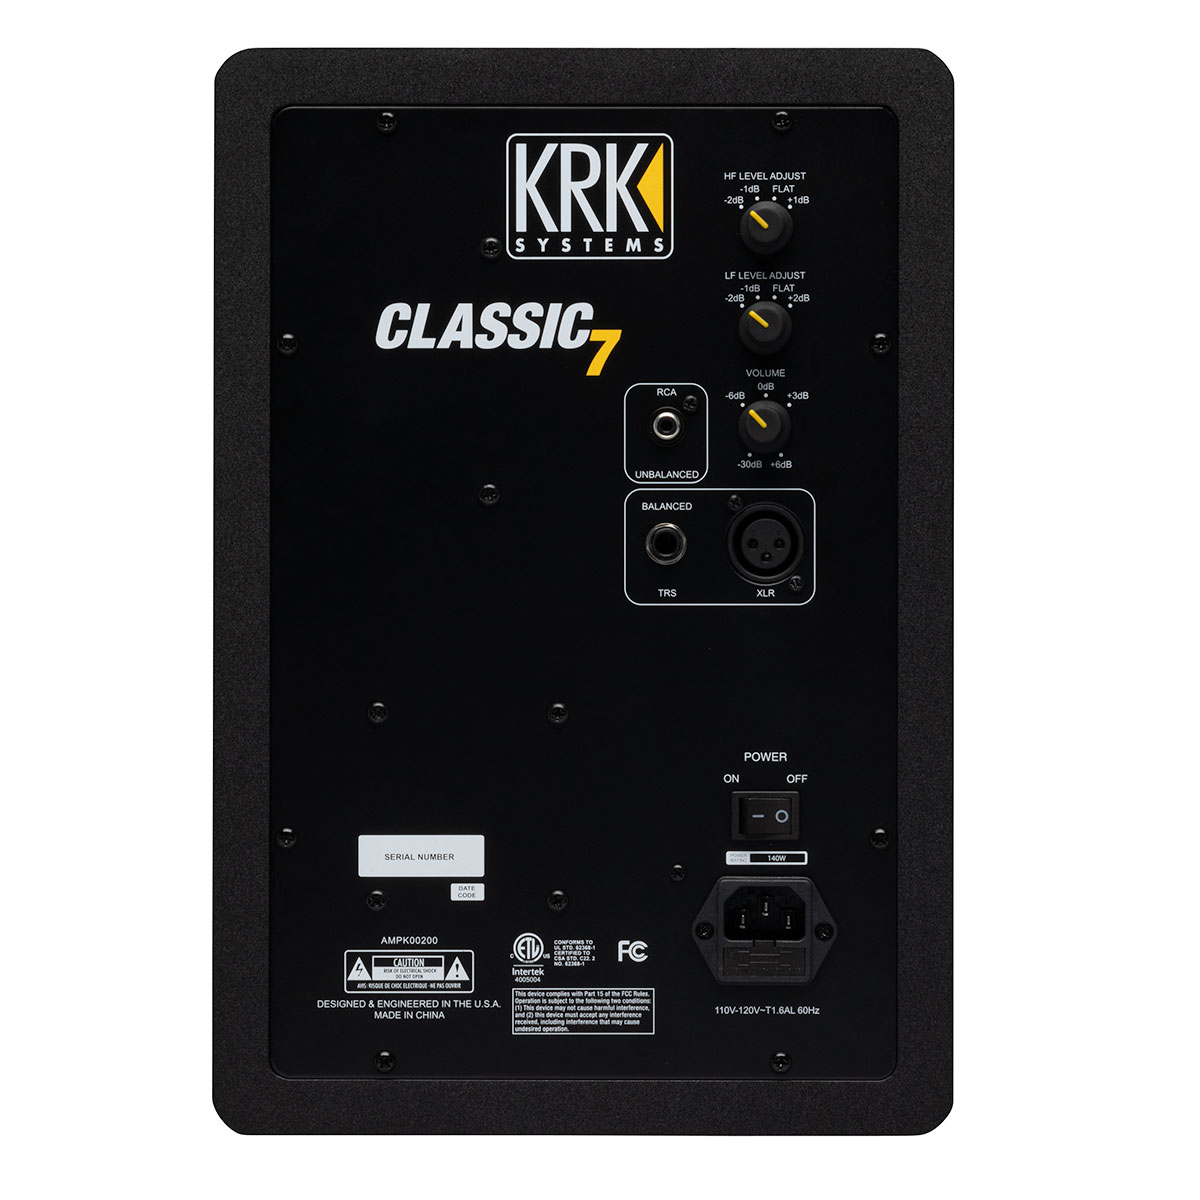 KRK RP7 G3 Classic Studio Monitor